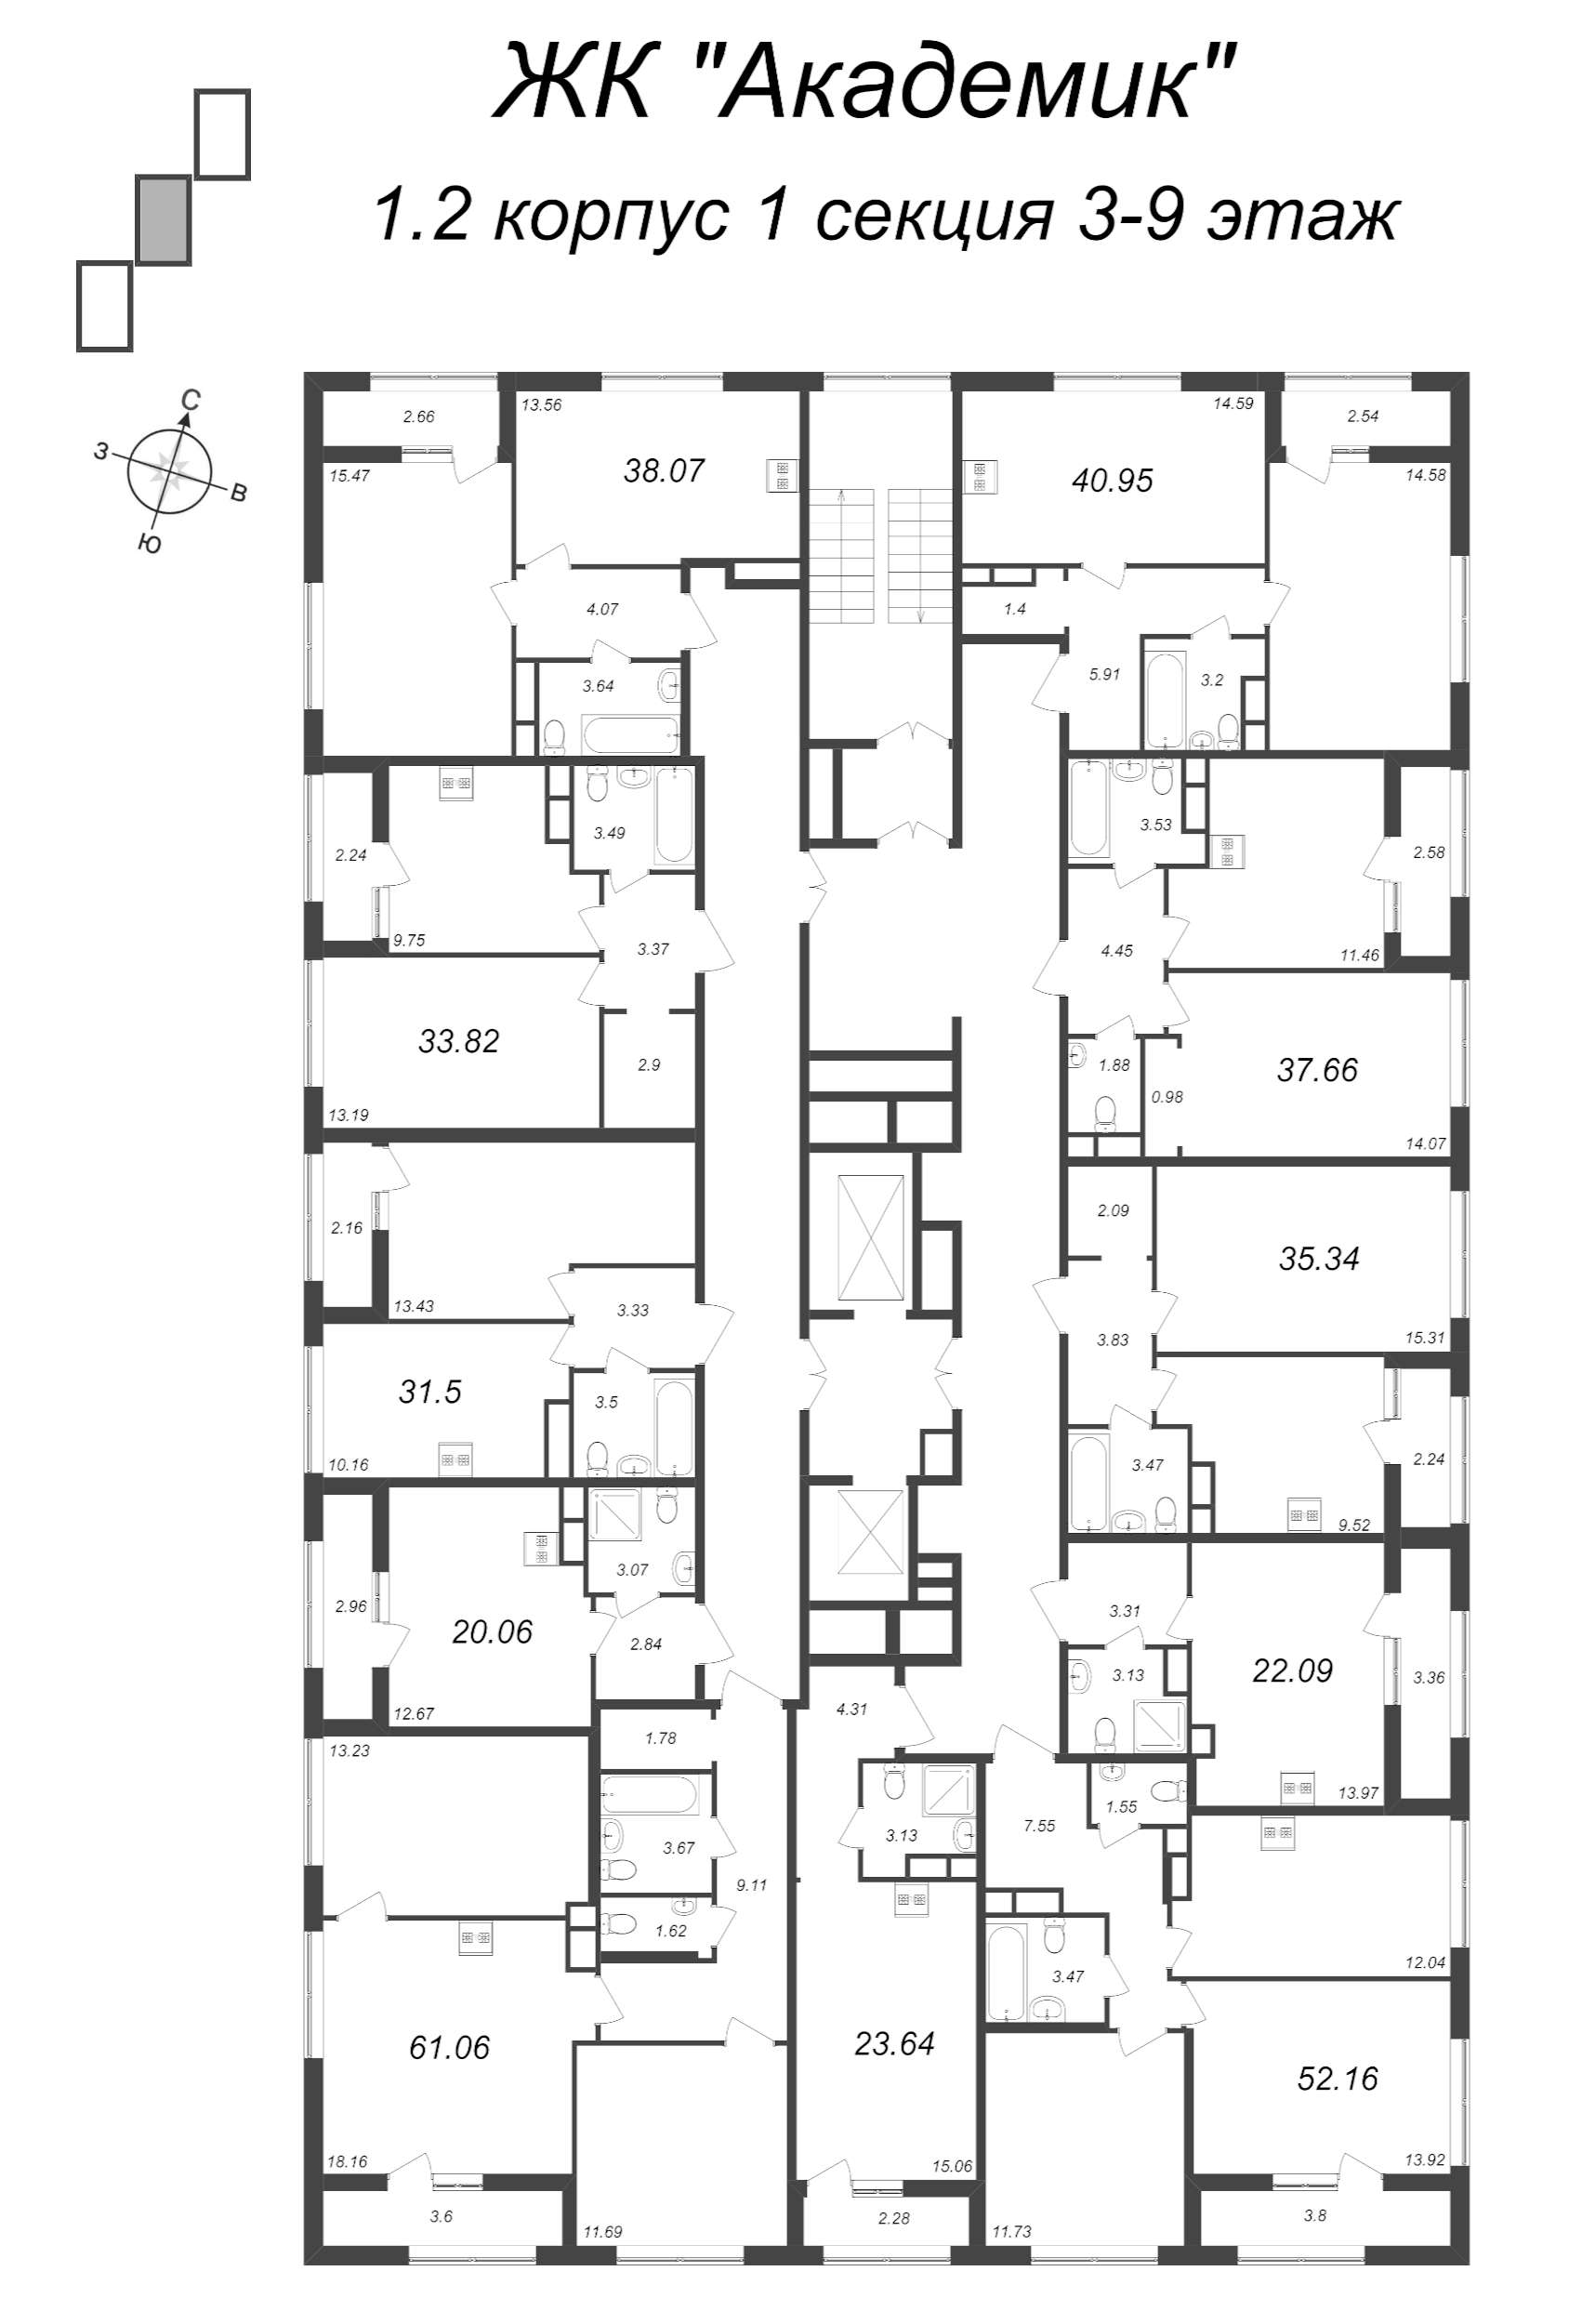 3-комнатная (Евро) квартира, 61.06 м² - планировка этажа